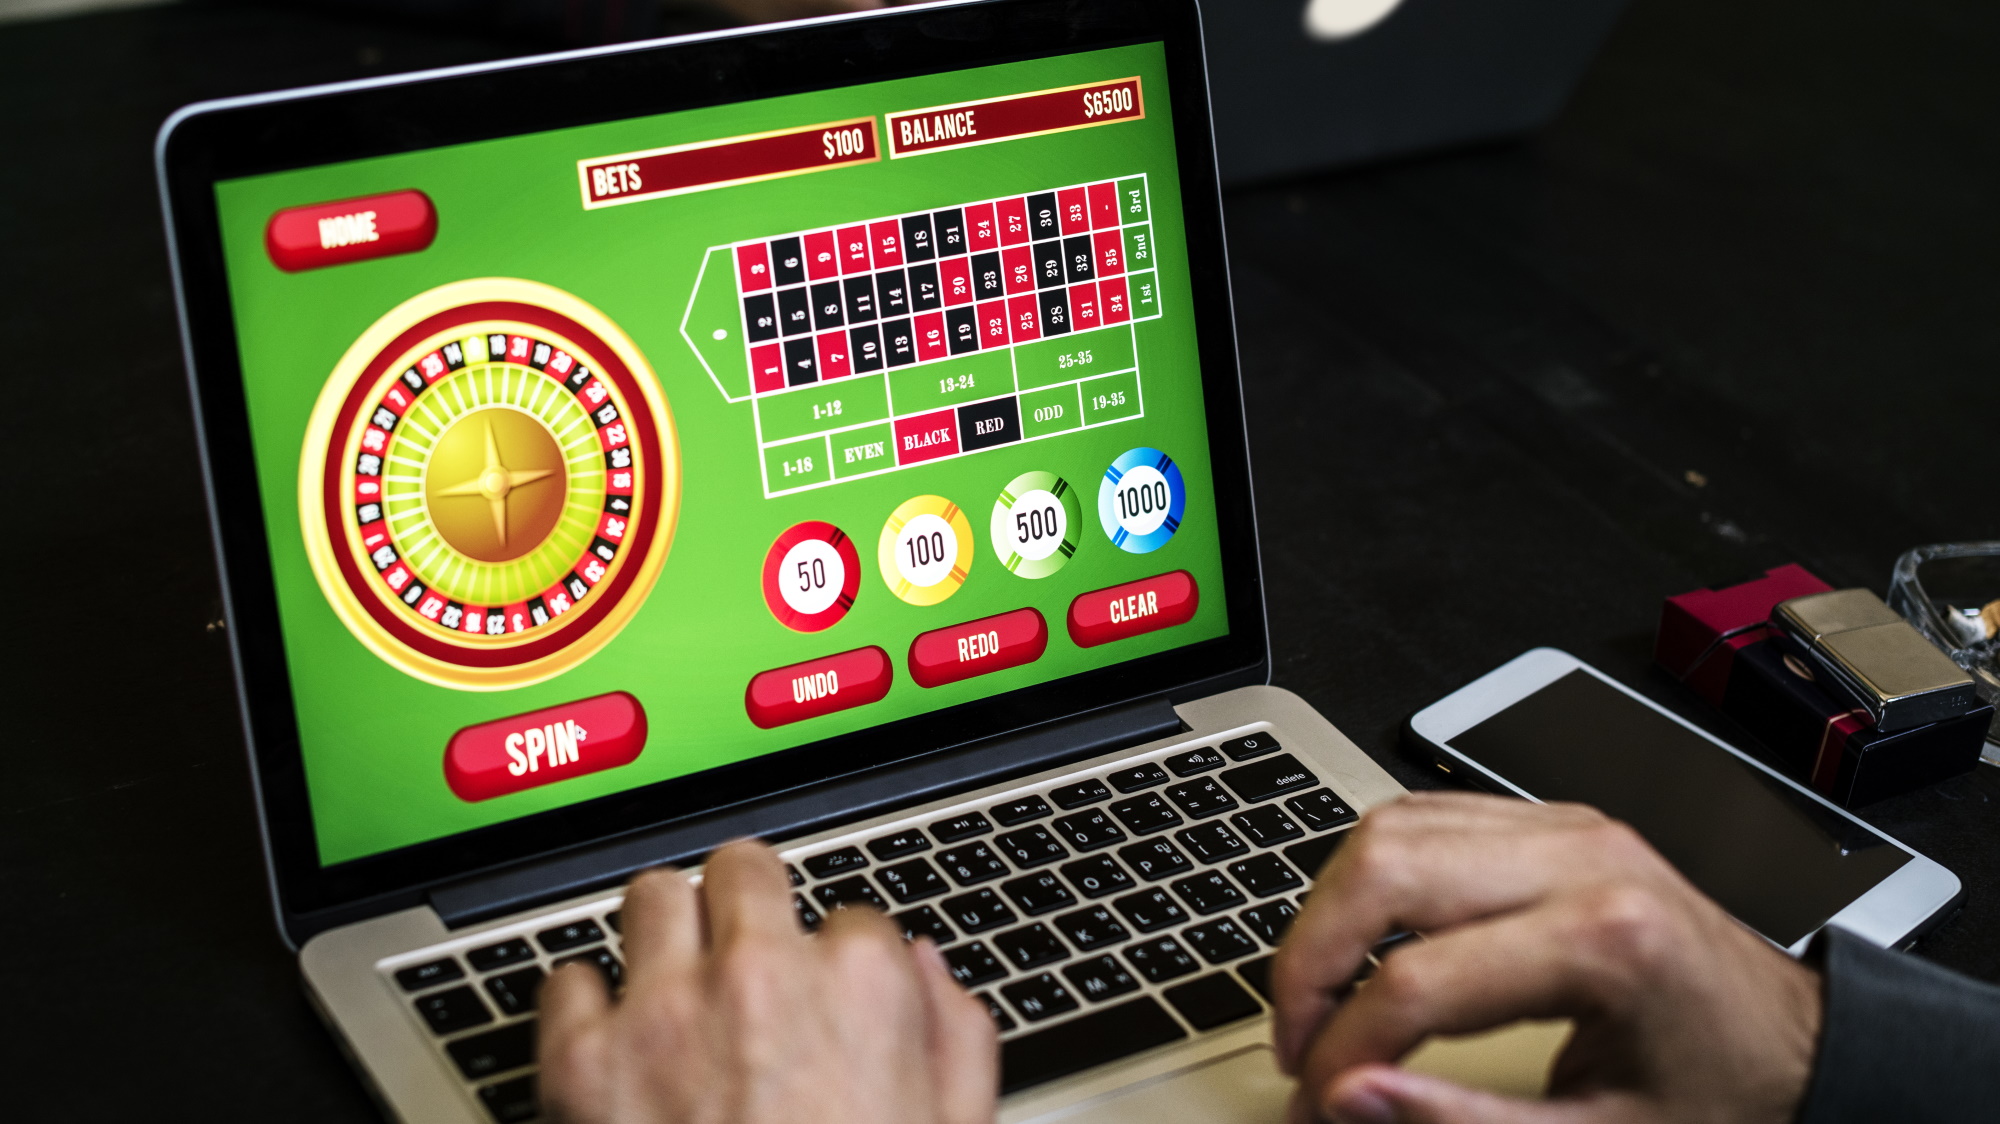 casino laptop 2021 1